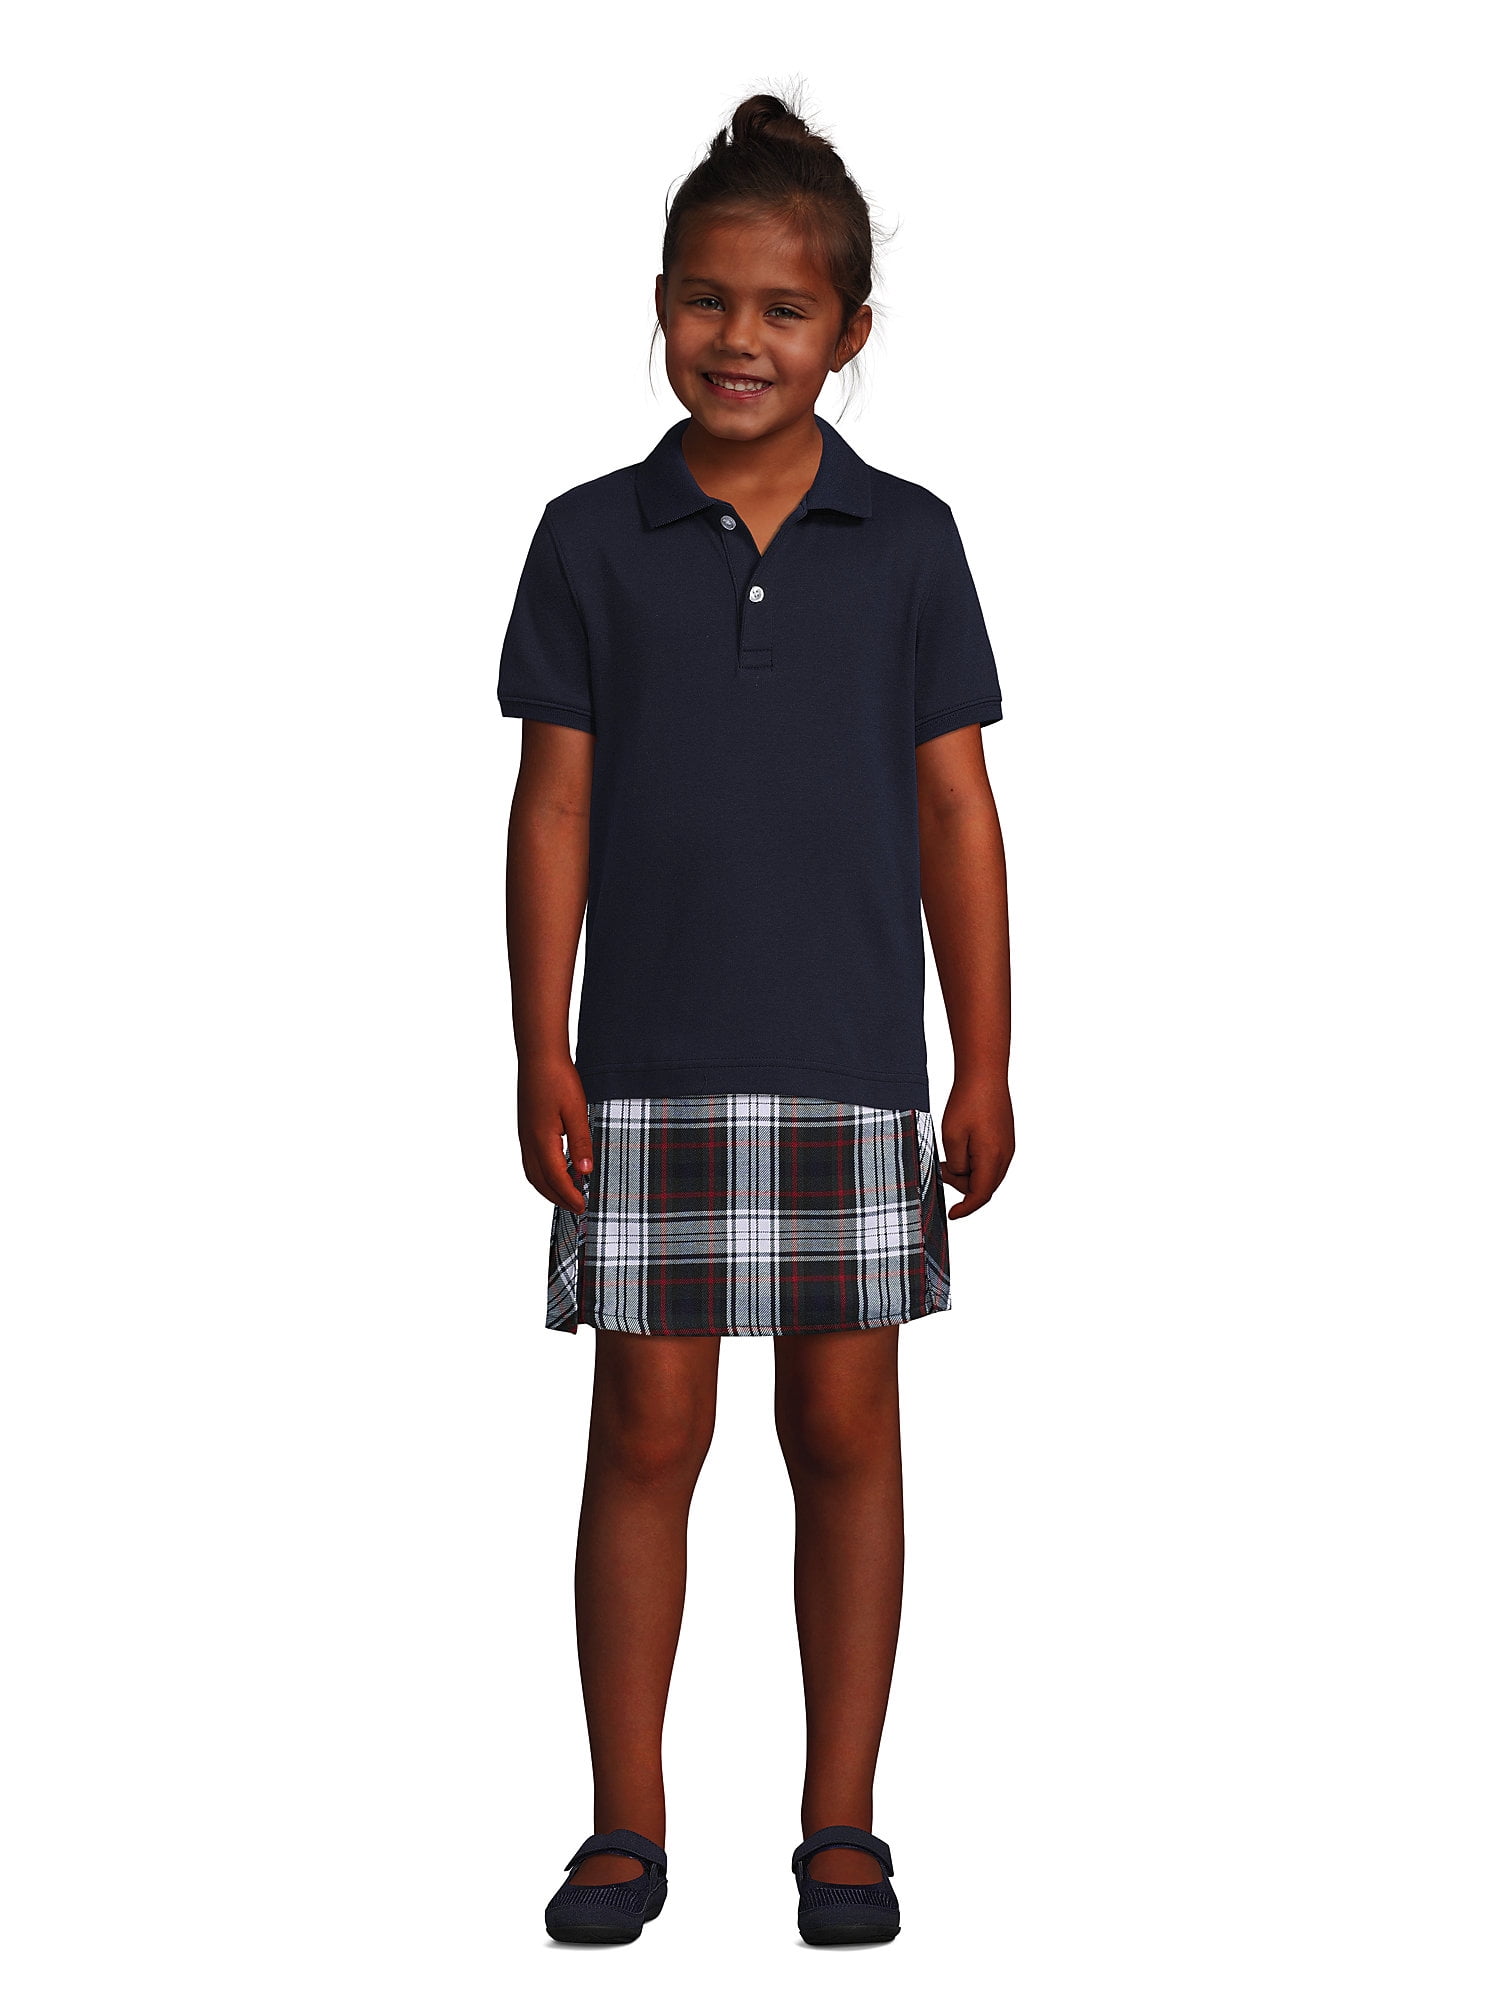 Lands' End School Uniform Kids Short Sleeve Tailored Fit Interlock Polo  Shirt - Medium - Classic Navy